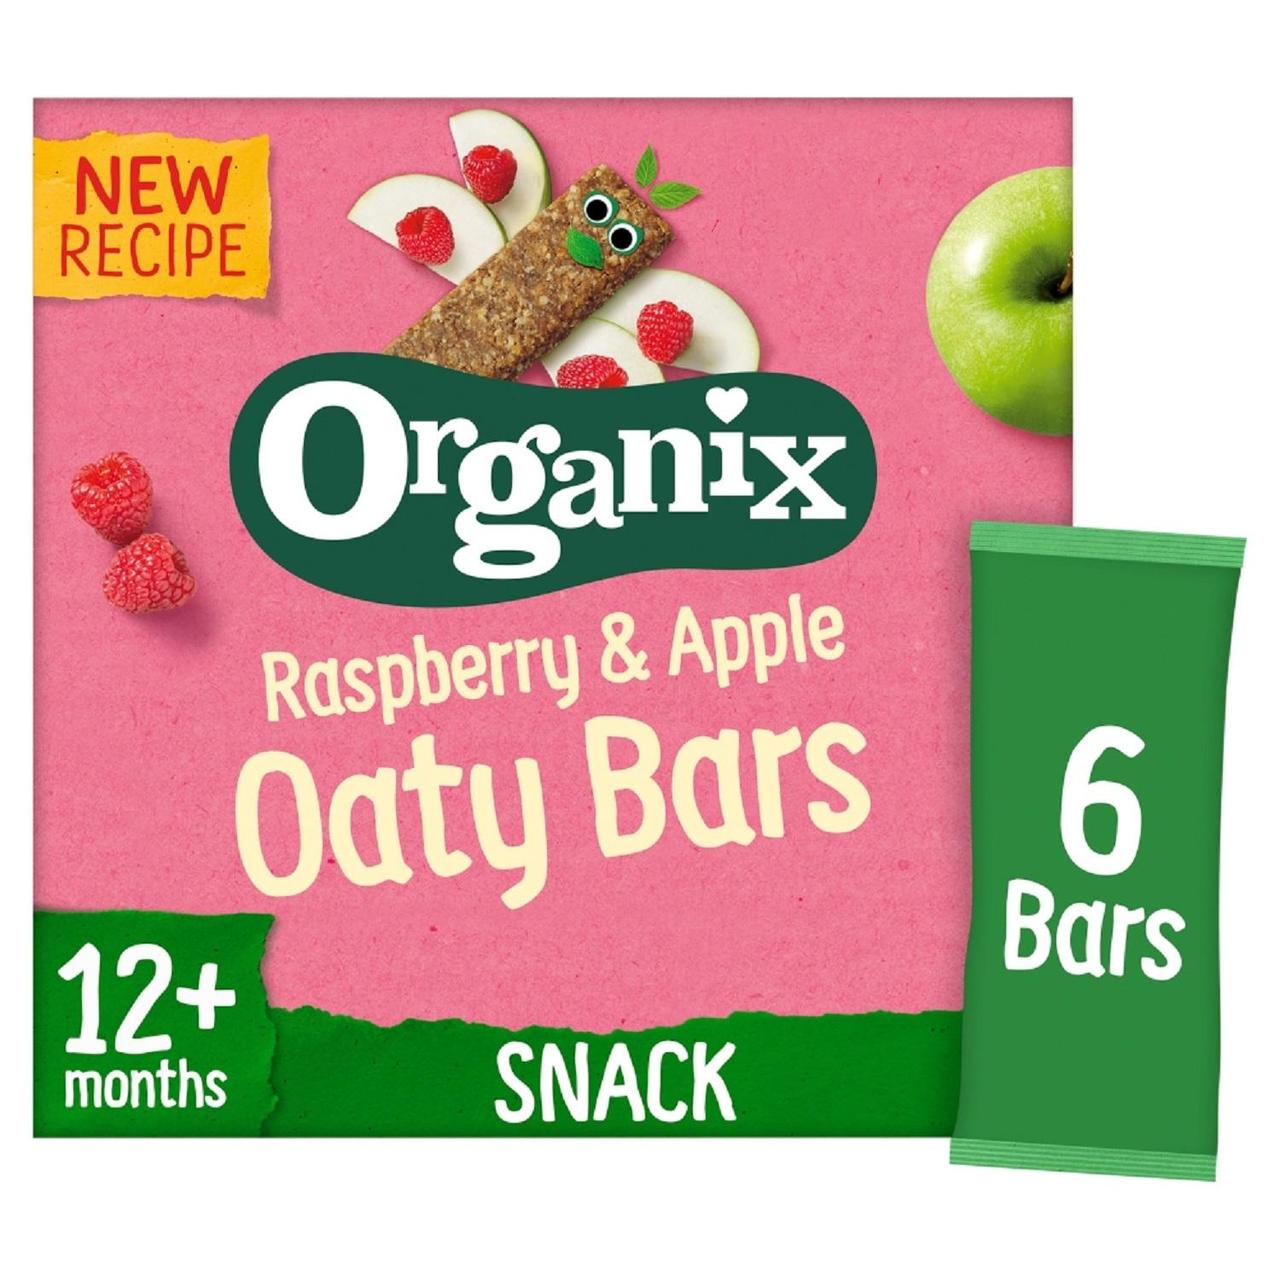 Raspberry & Apple Soft Oaty Bars